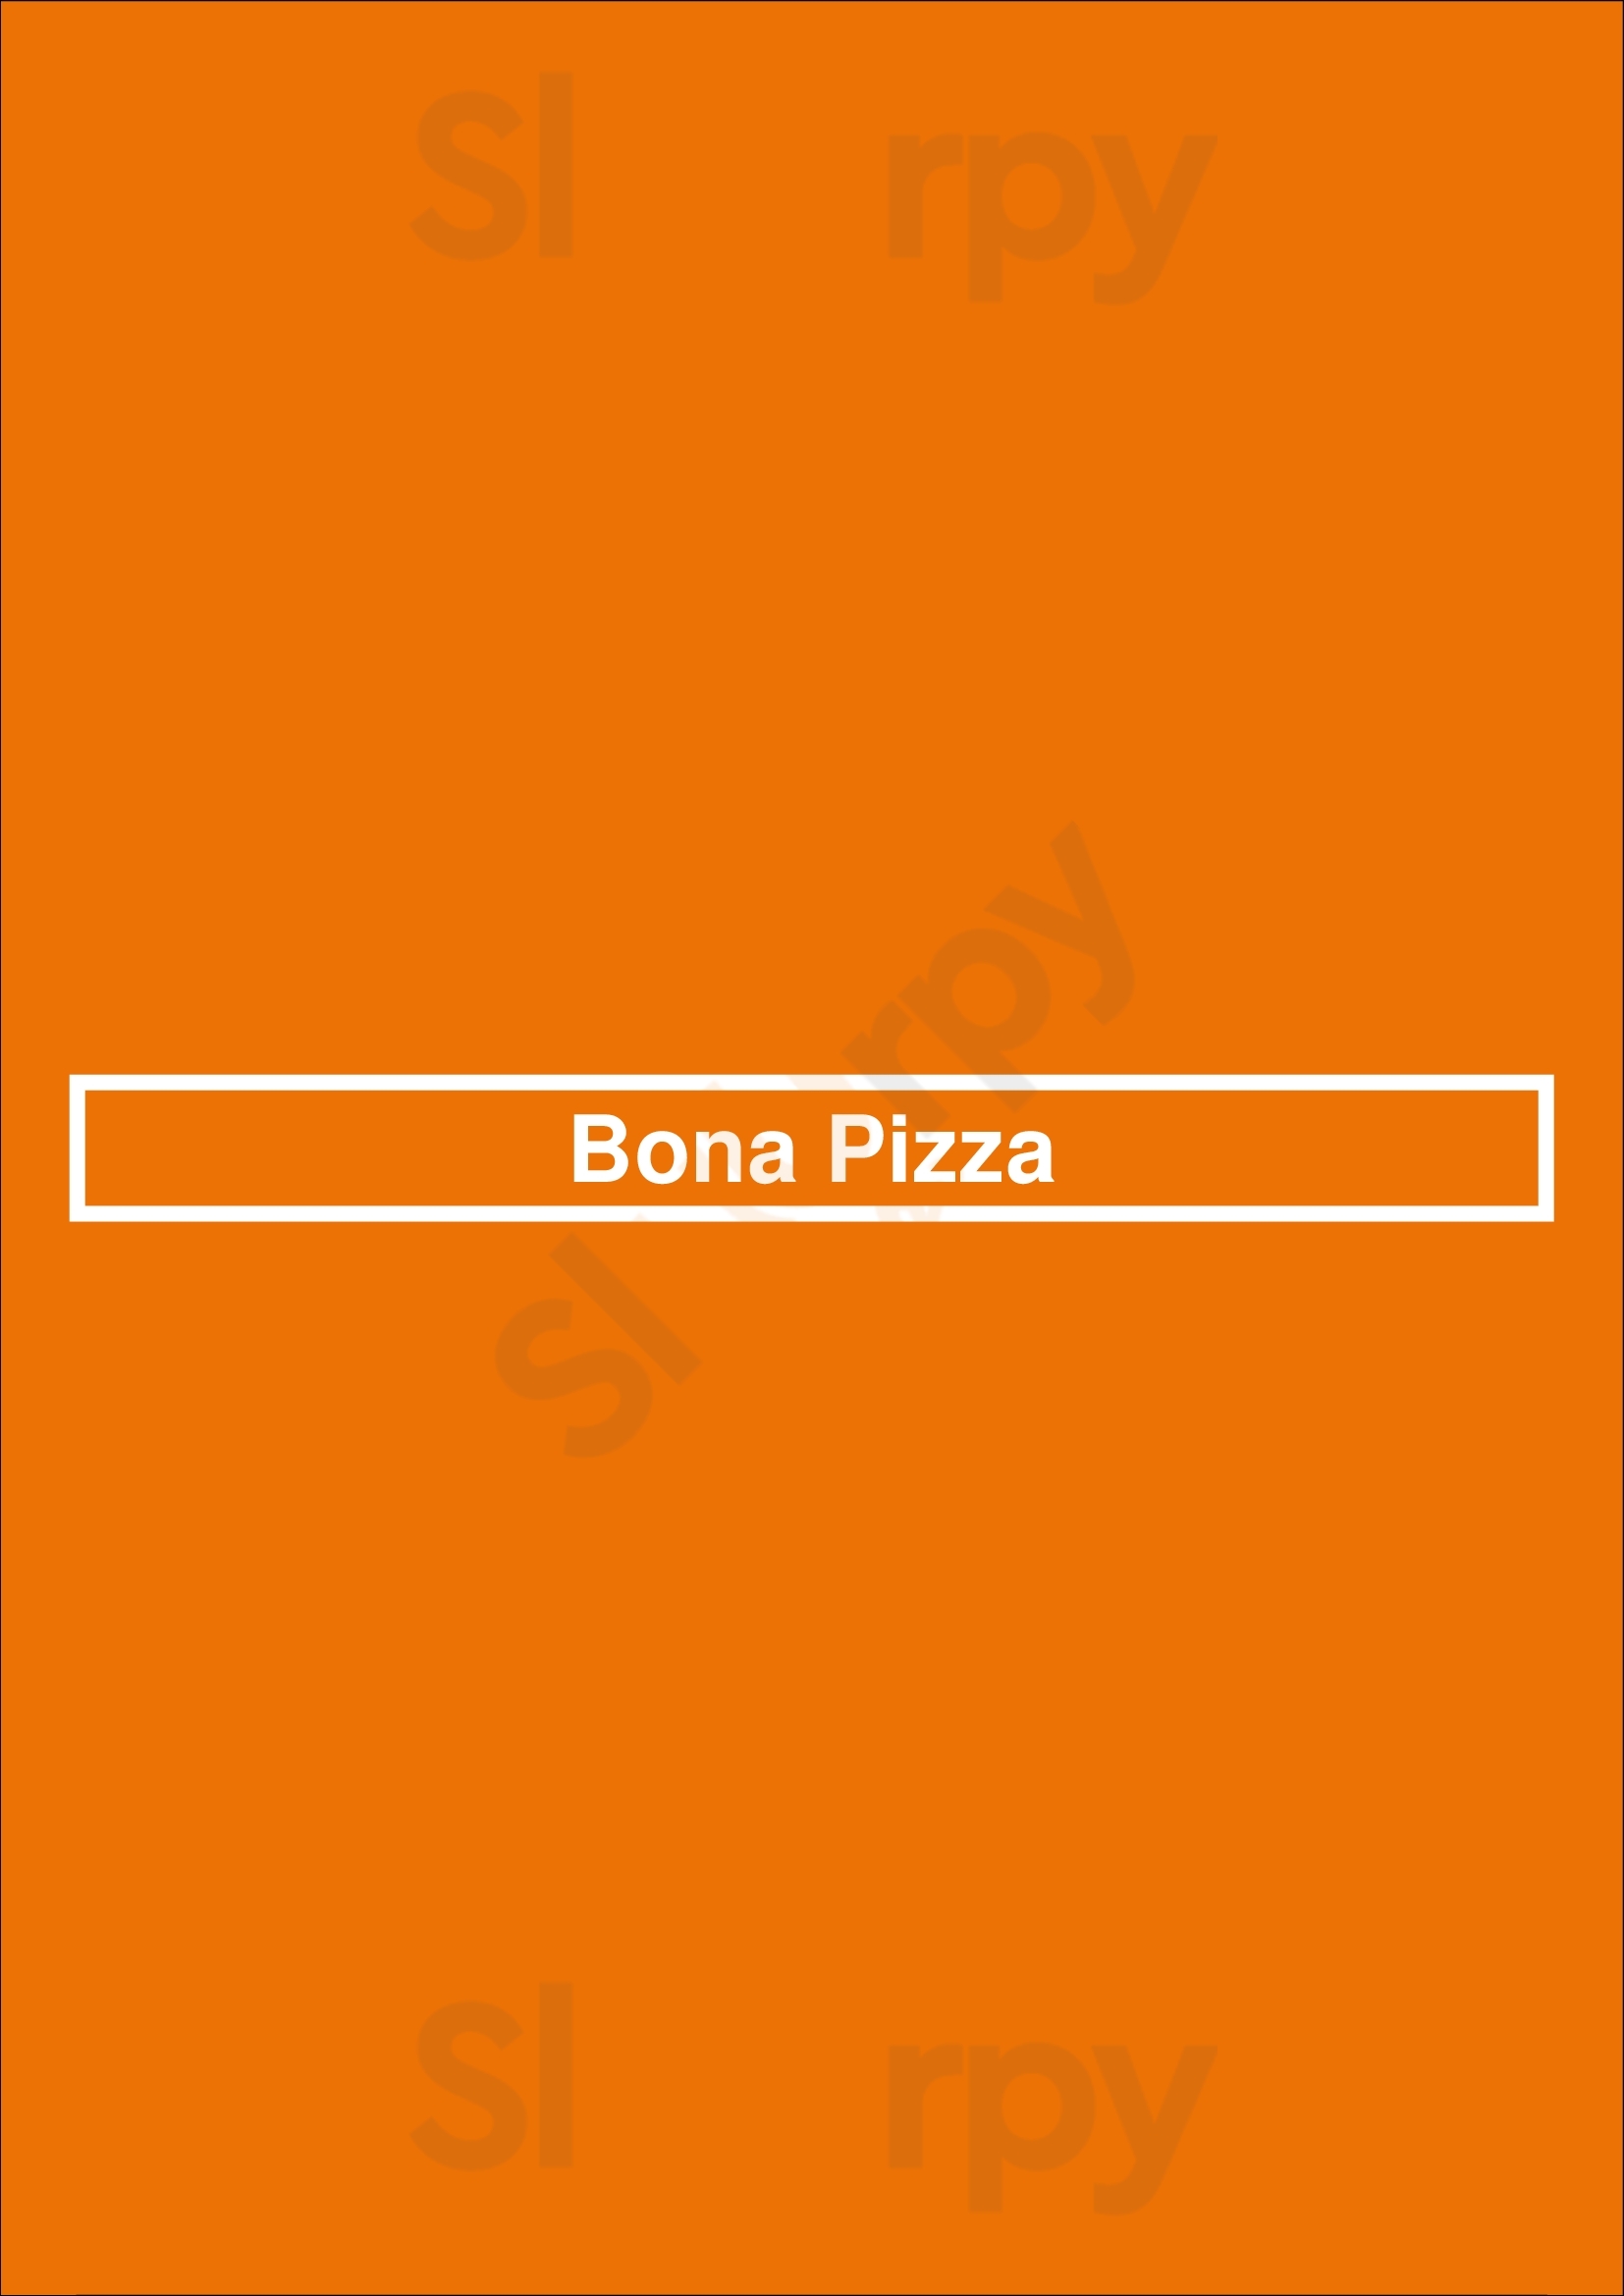 Bona Pizza San Jose Menu - 1